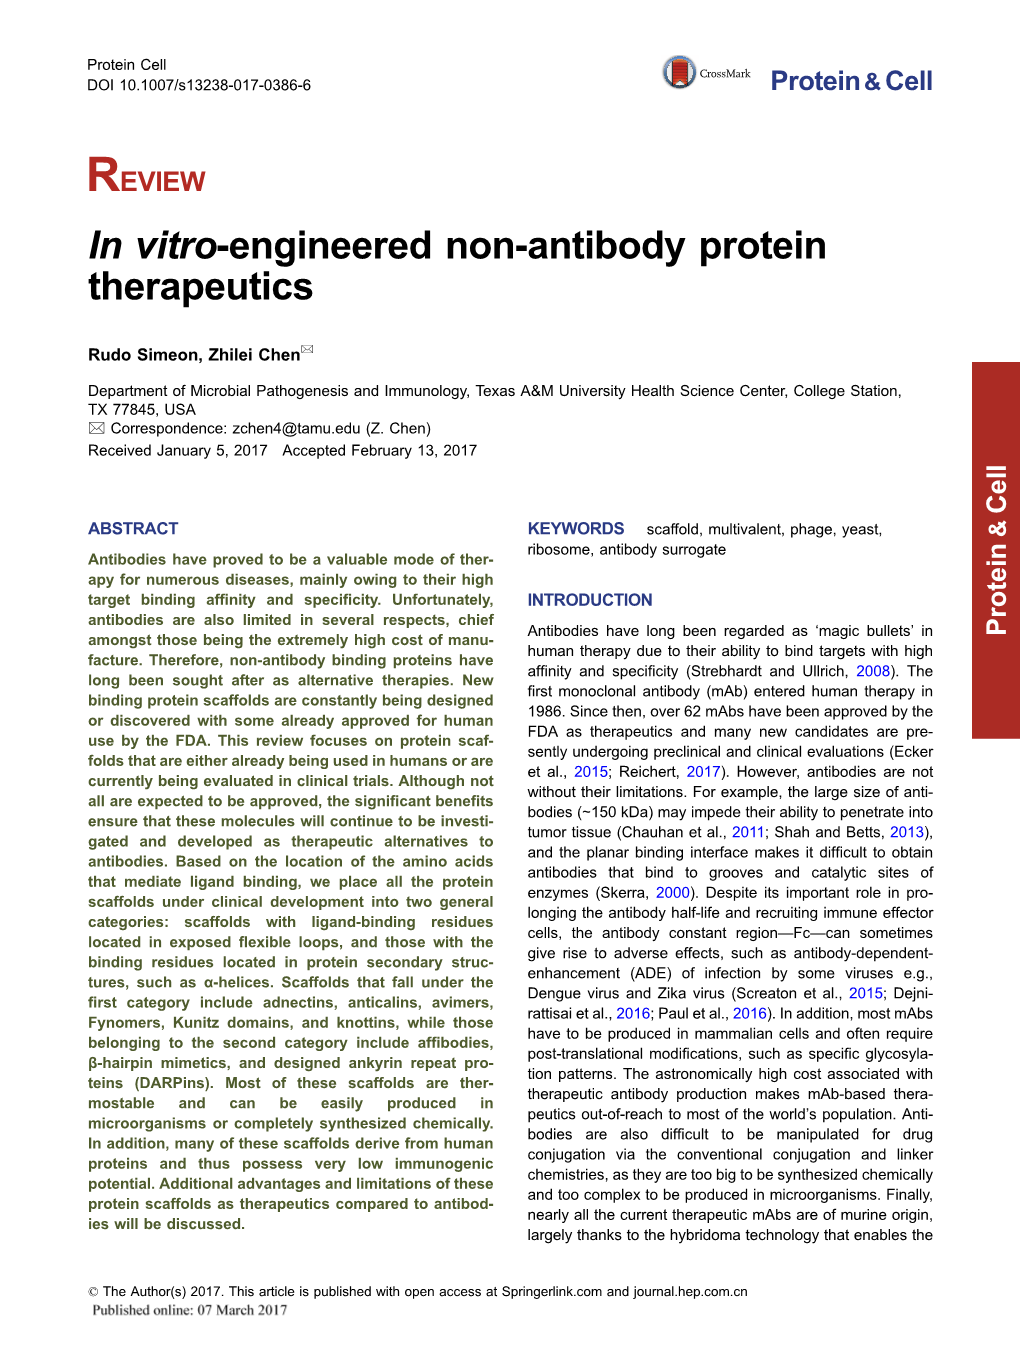 In Vitro-Engineered Non-Antibody Protein Therapeutics